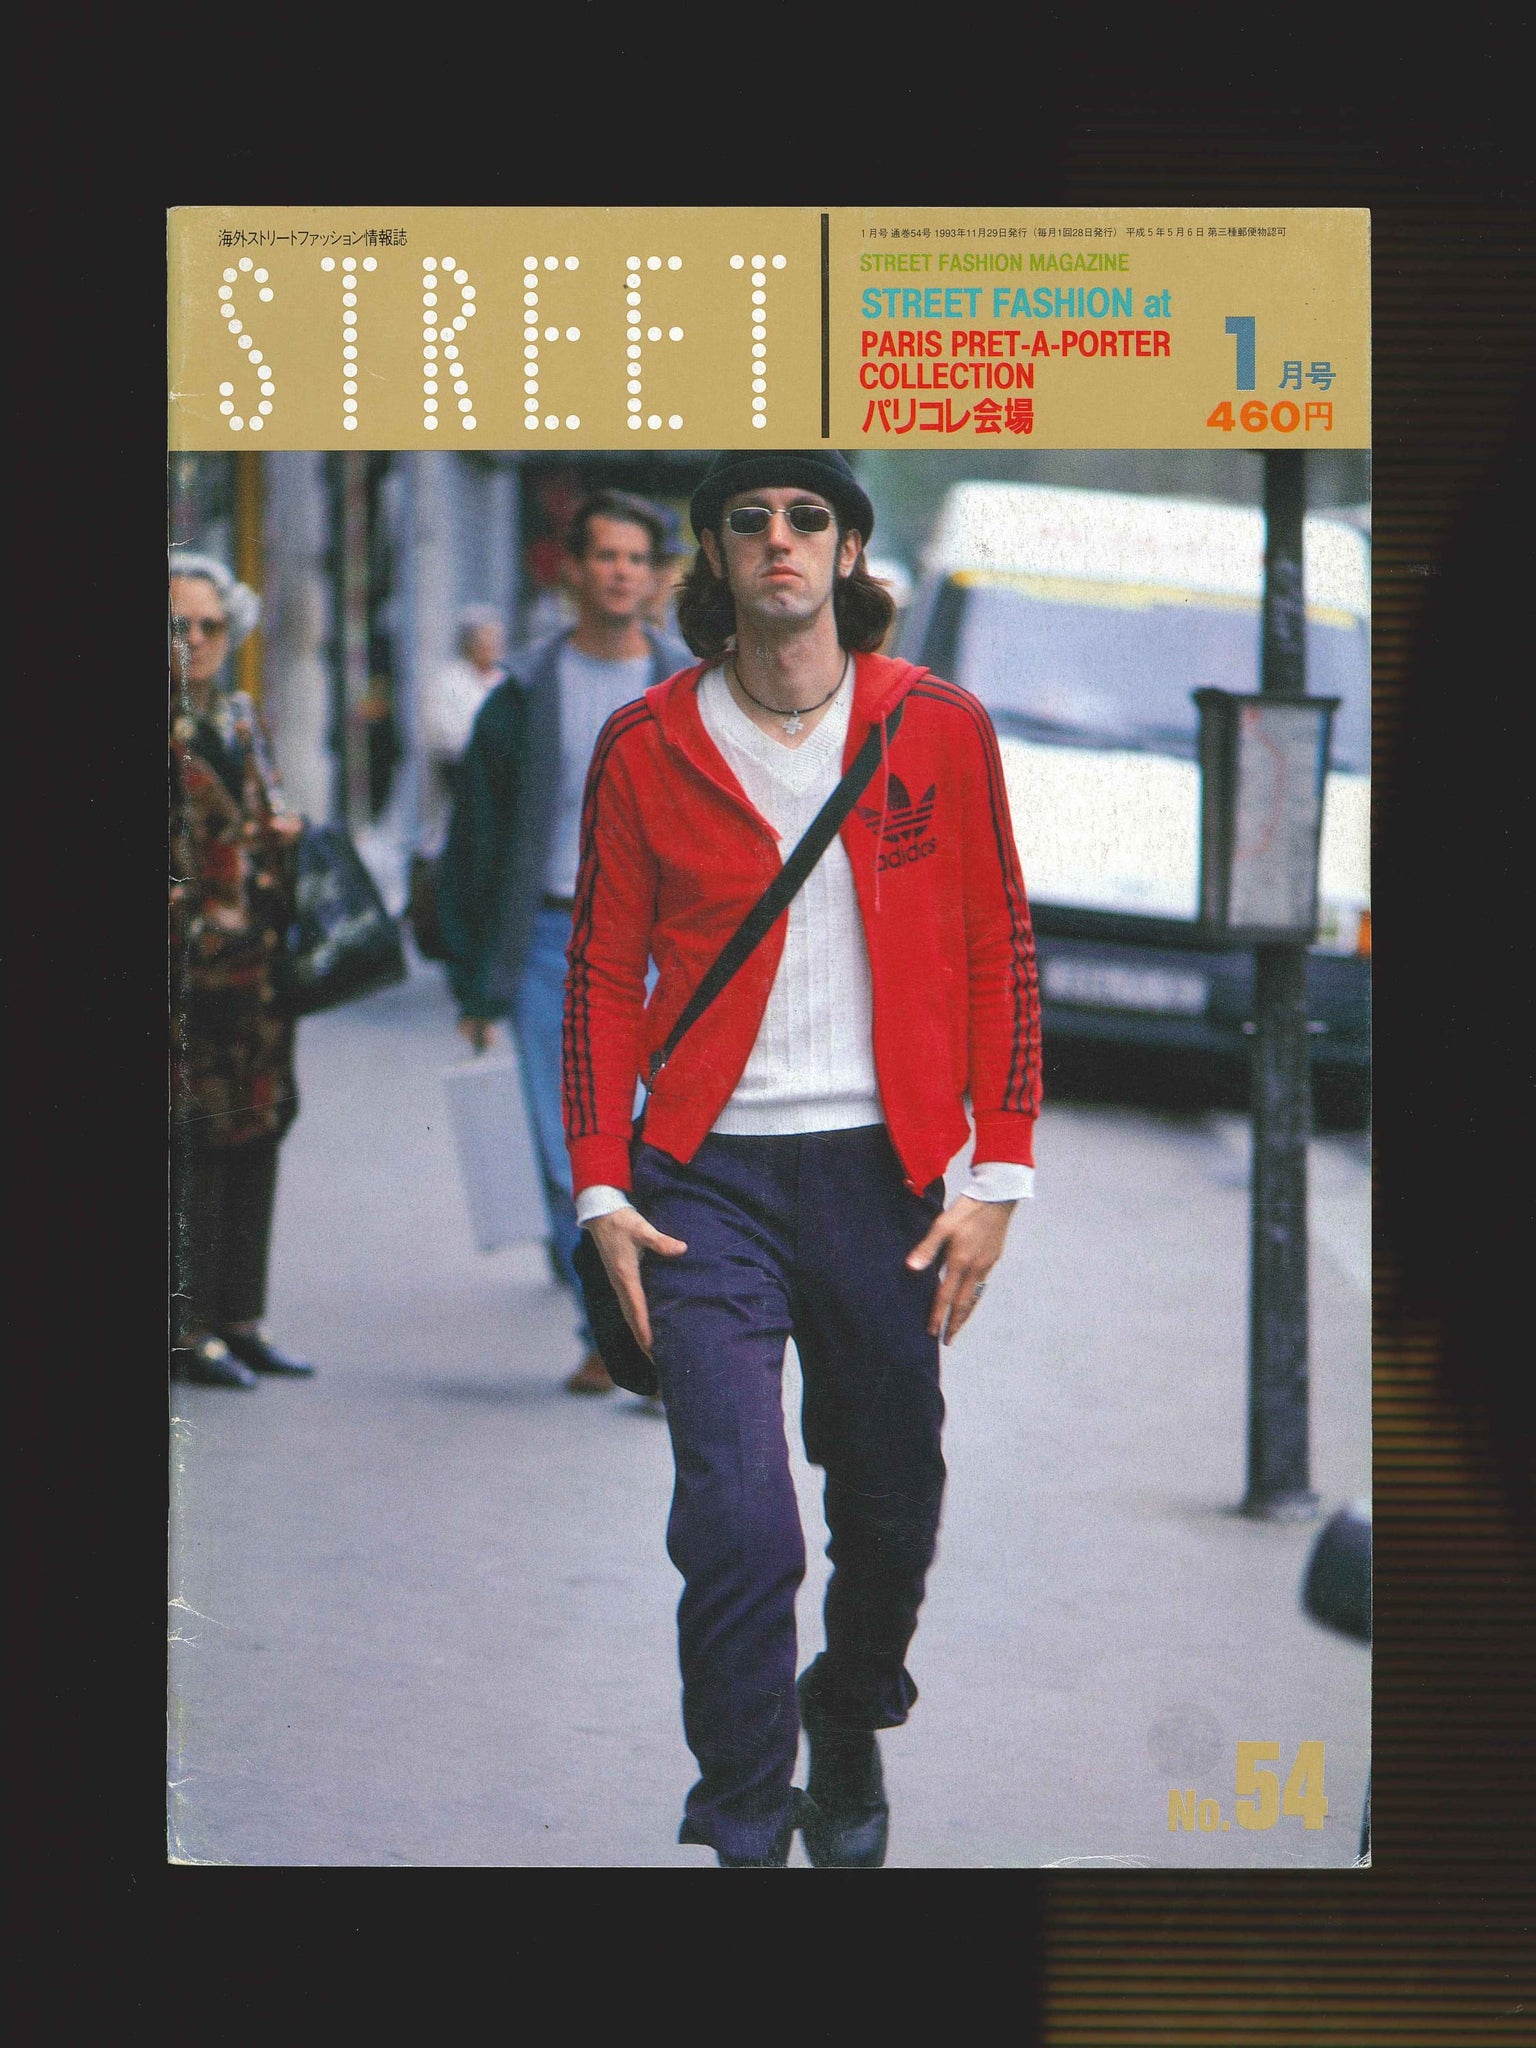 STREET magazine no. 54 / january 1994 / paris collections / Shoichi Aoki